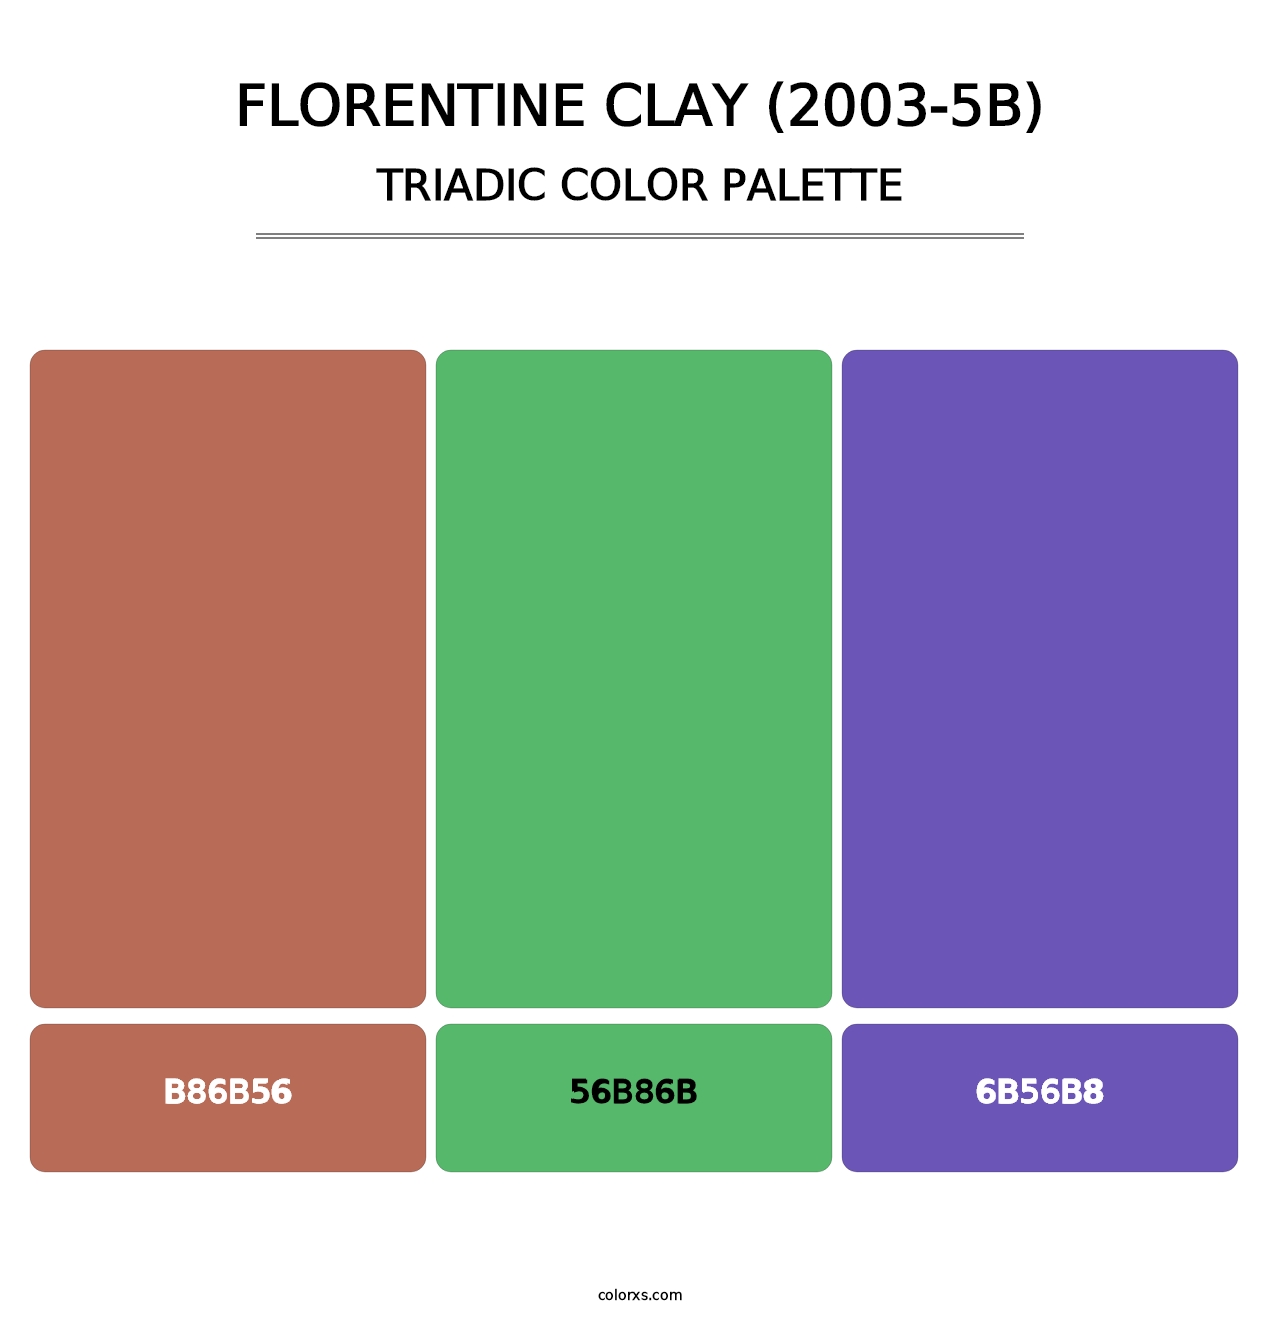 Florentine Clay (2003-5B) - Triadic Color Palette